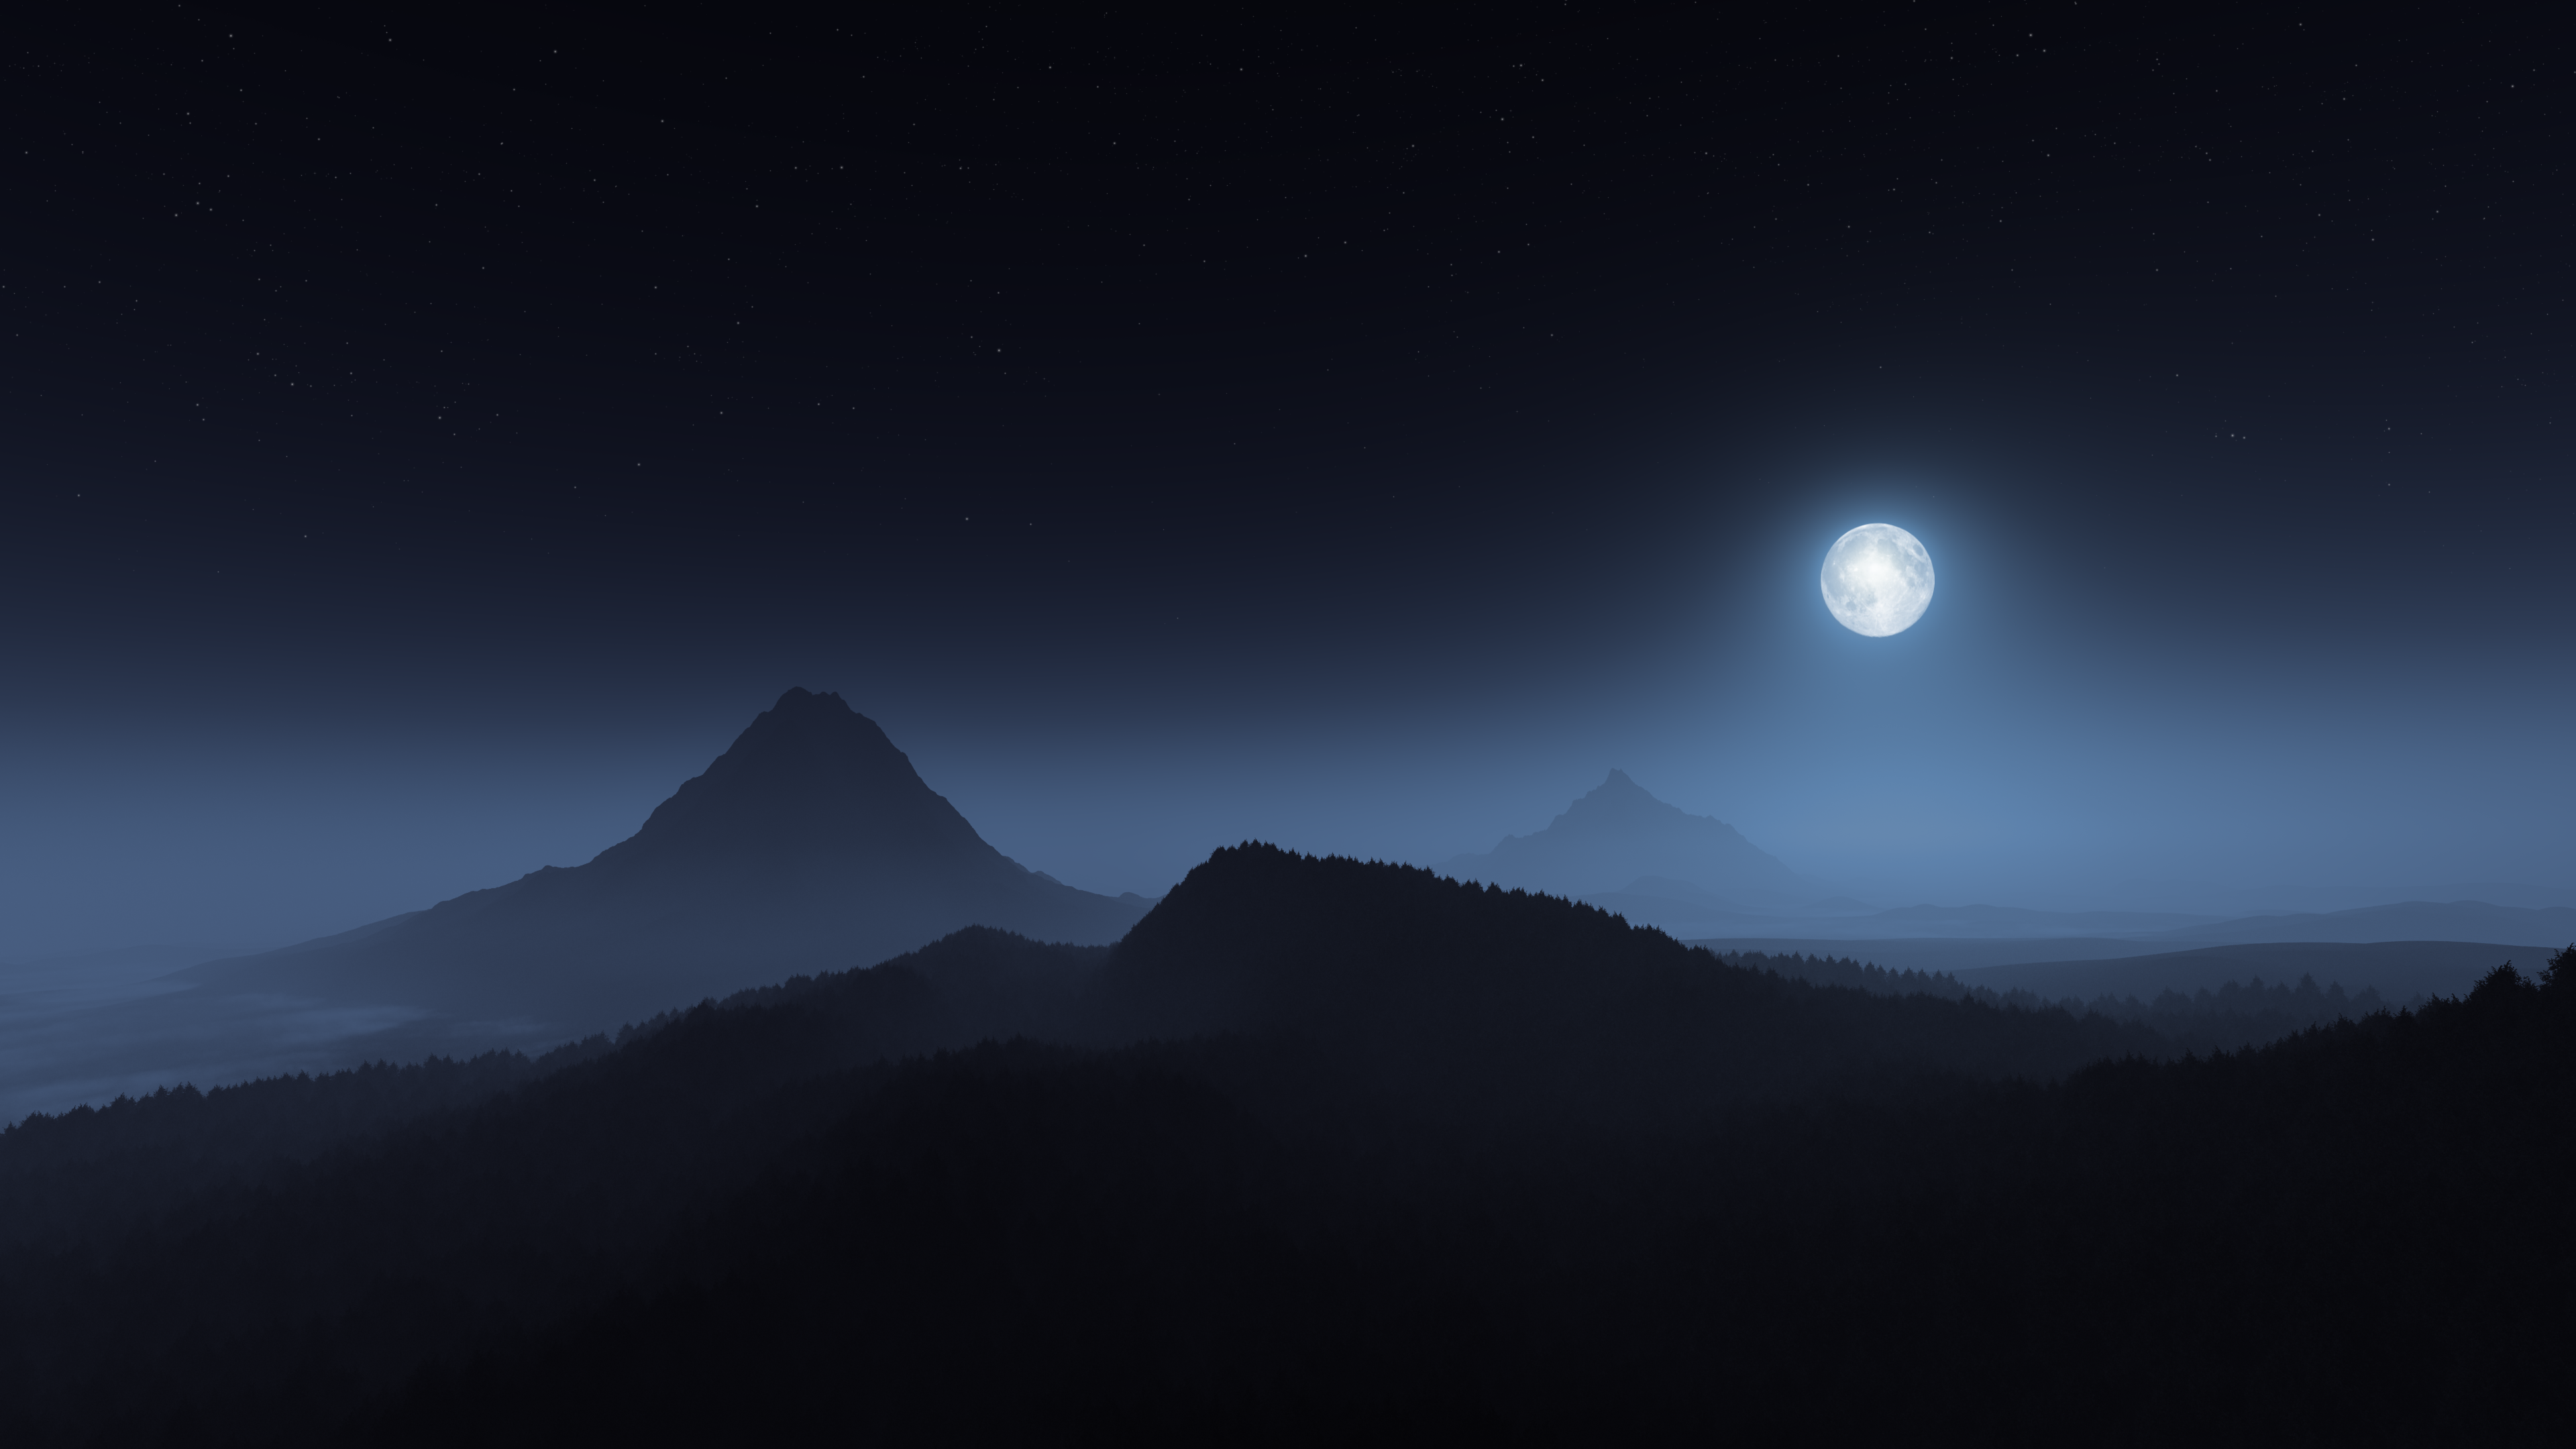 General 3840x2160 hypnoshot digital art illustration artwork CGI landscape night nightscape nature Moon mountains stars forest moonlight